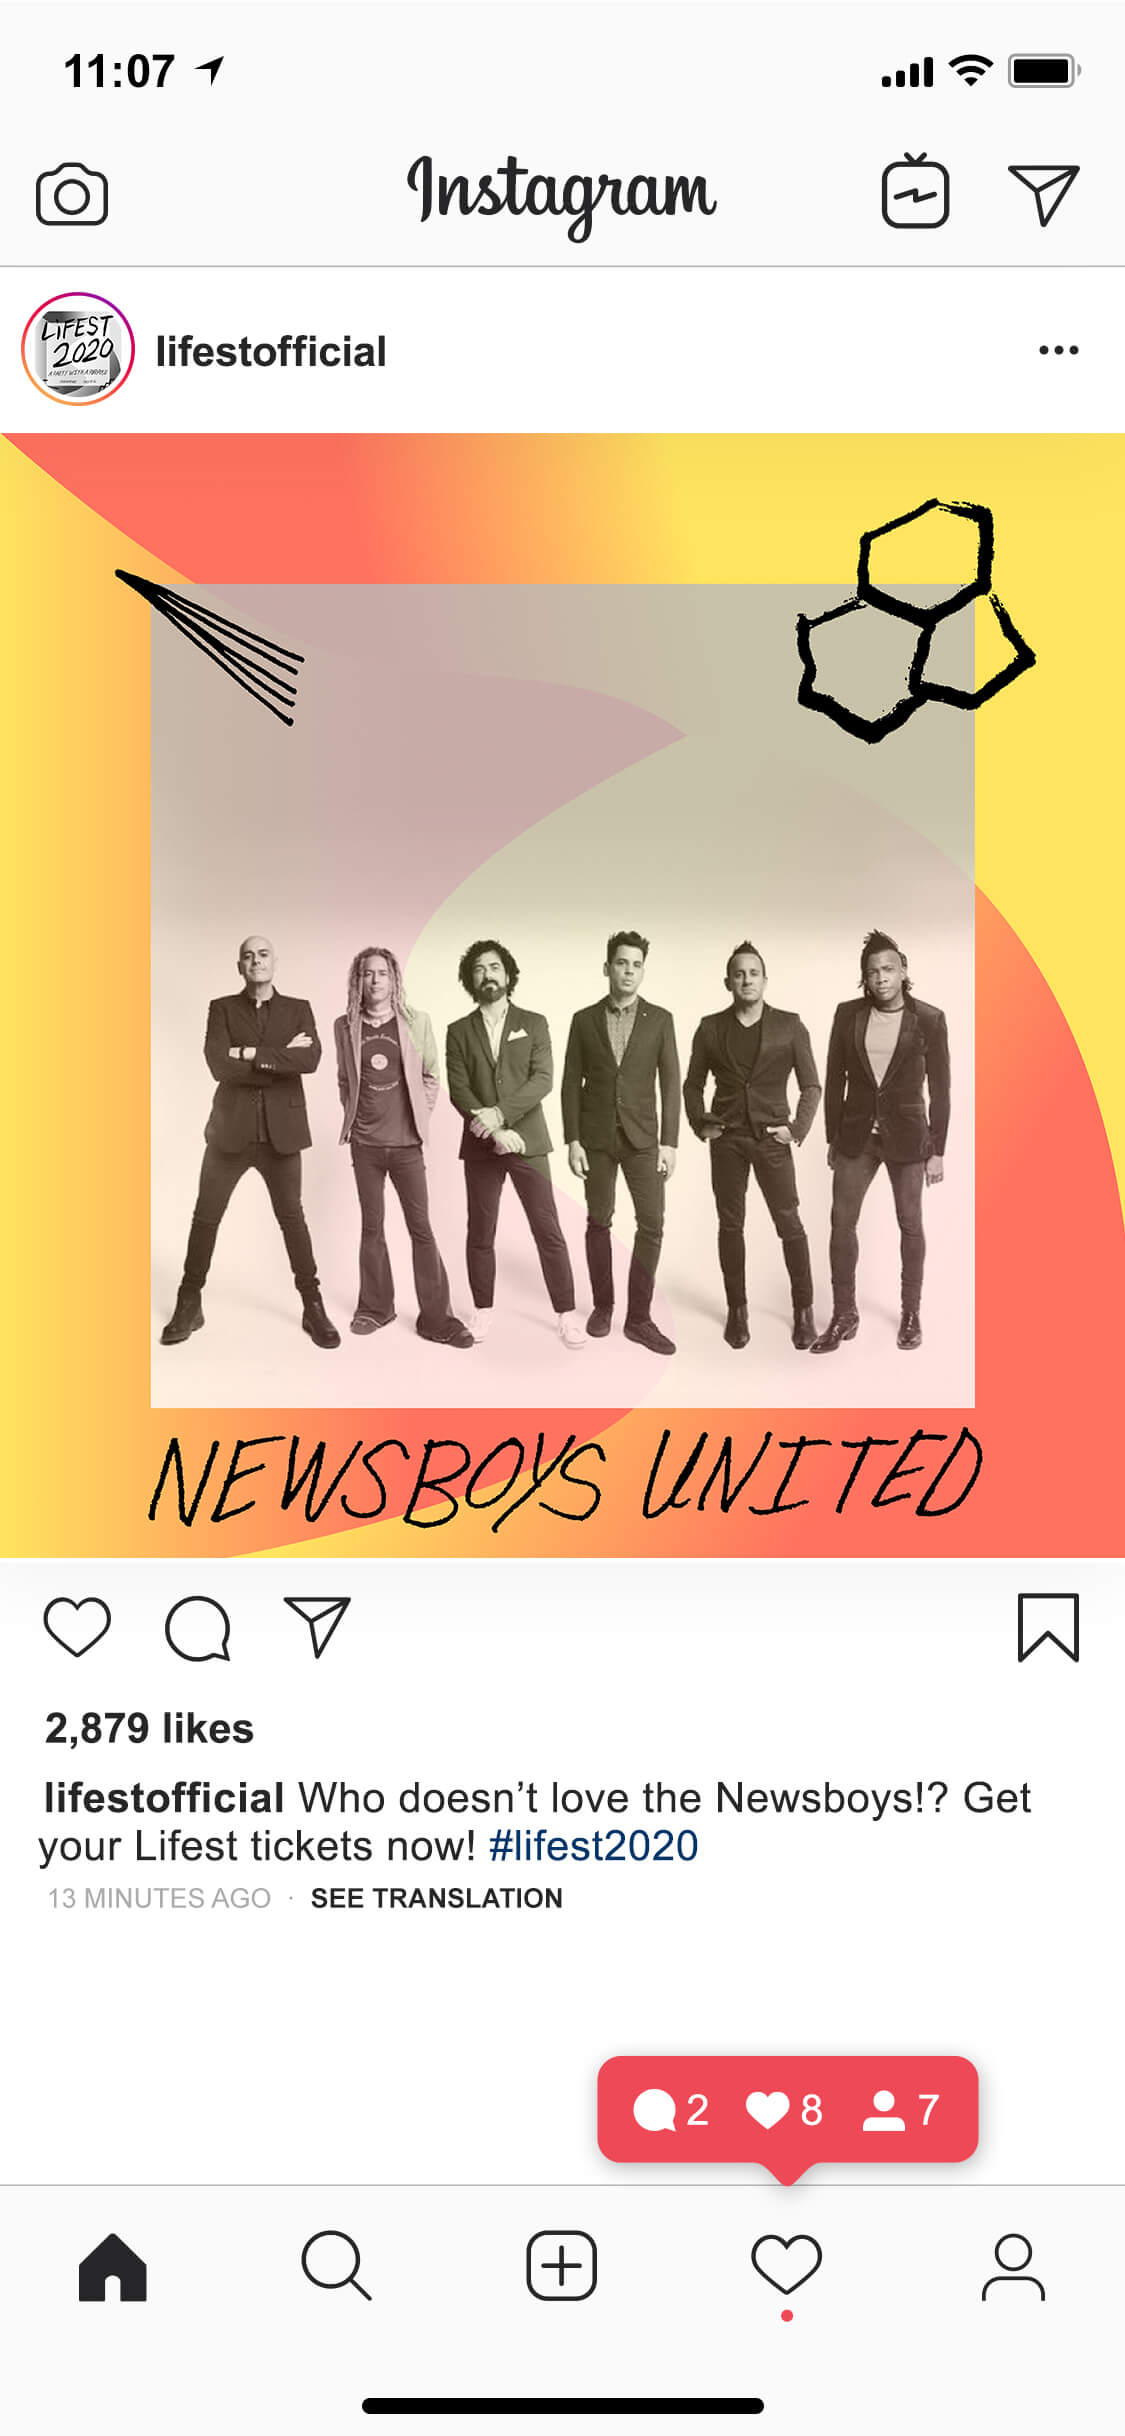 Lifest neon design Instagram post 2 mockup, featuring music artist Newsboys United